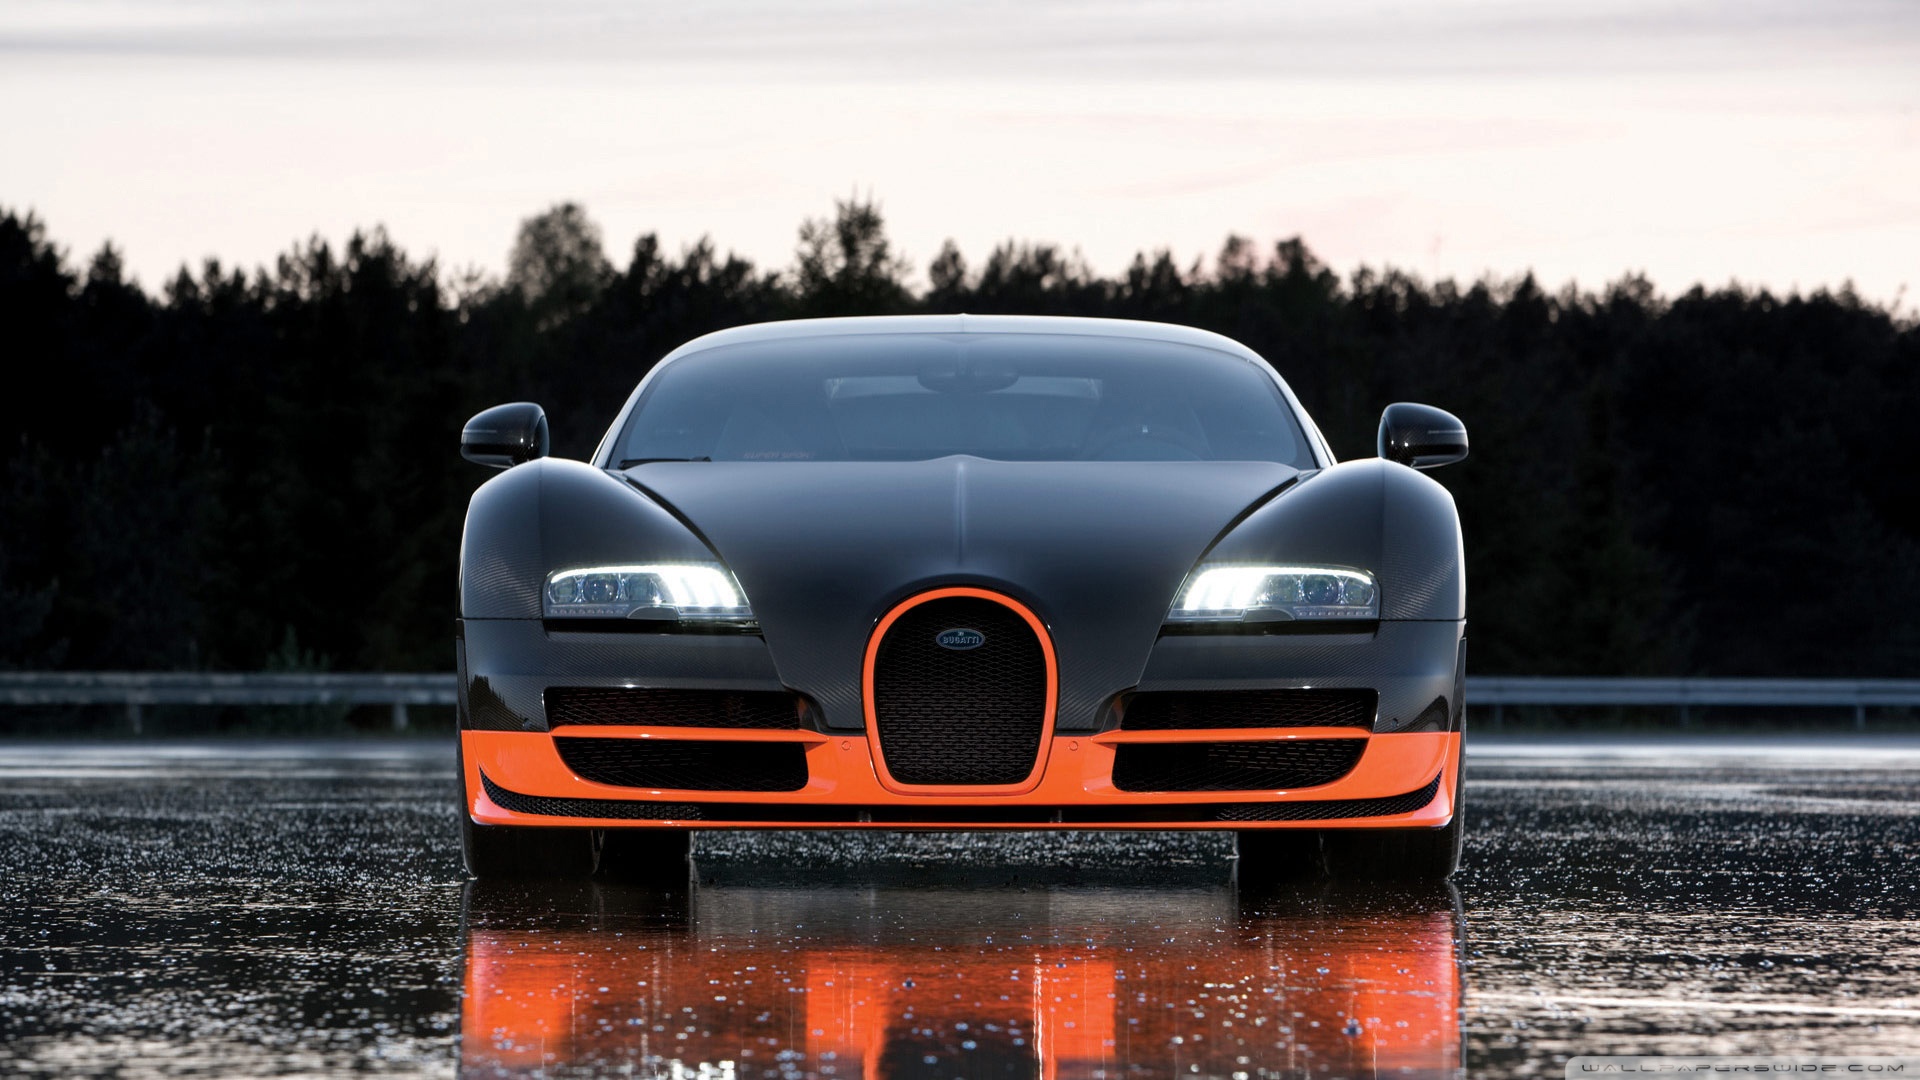 Hd Wallpaper Of Bugatti Car